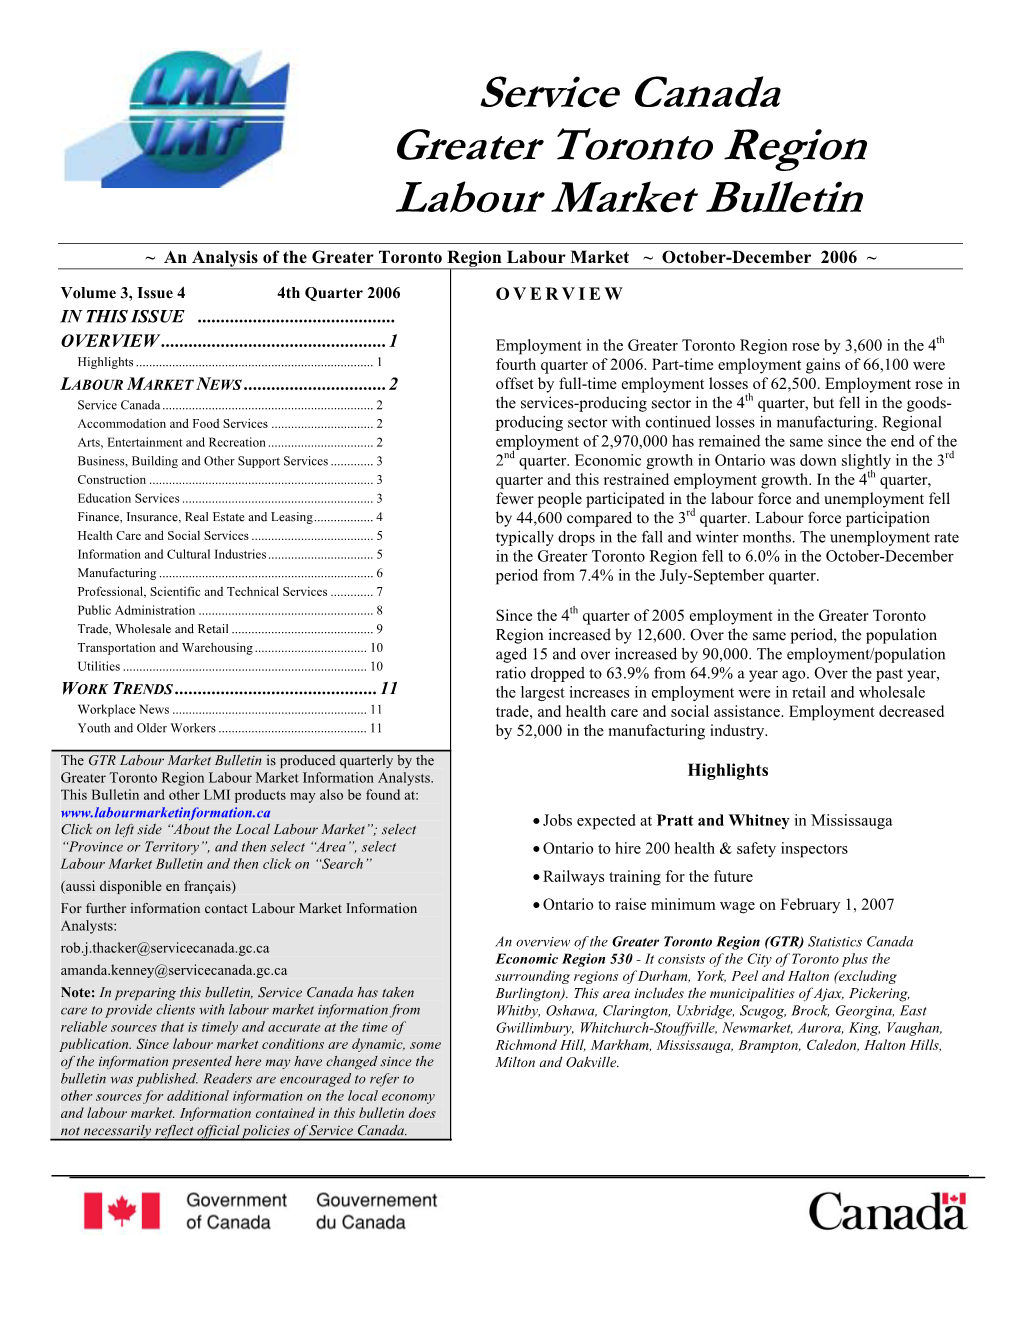 Service Canada Greater Toronto Region Labour Market Bulletin